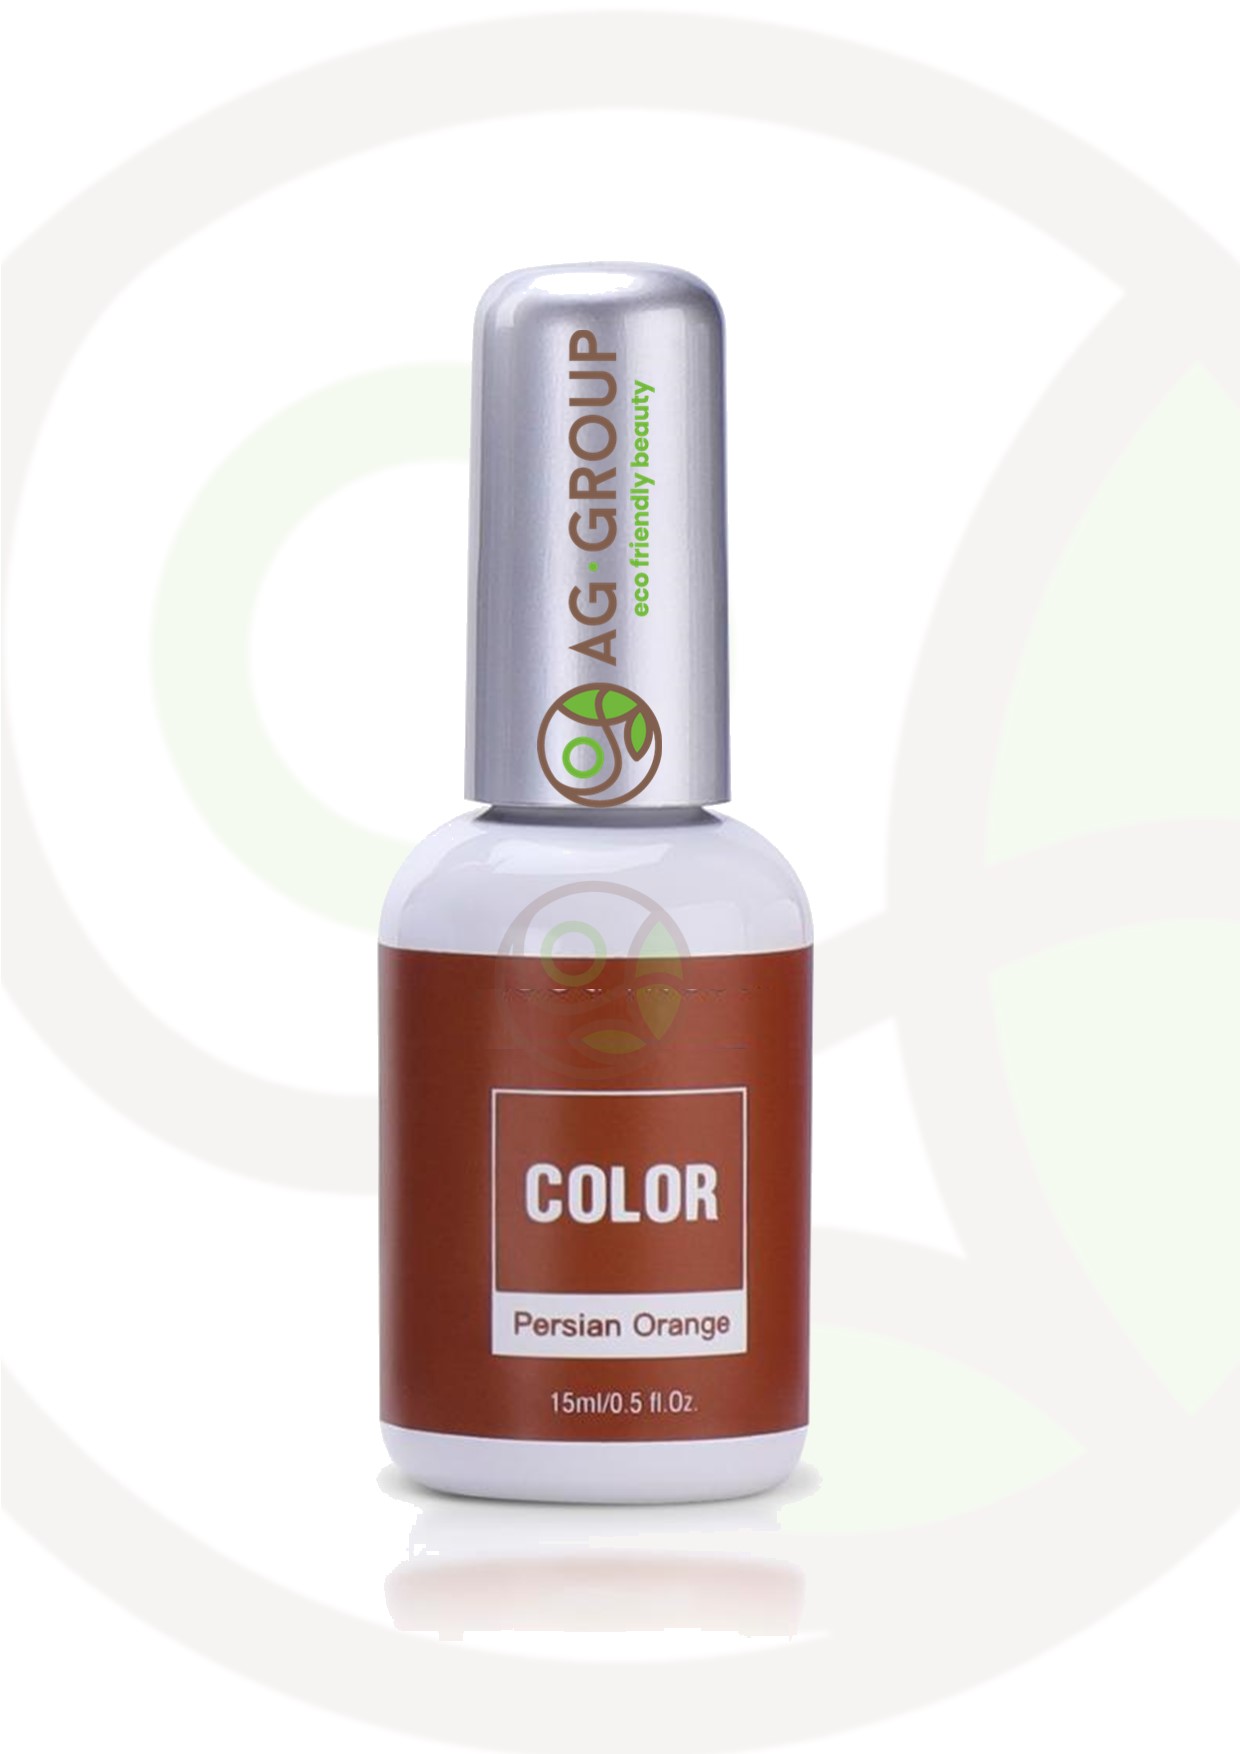 Featured image for “Gel polish soak -off led/uv- color persian orange”